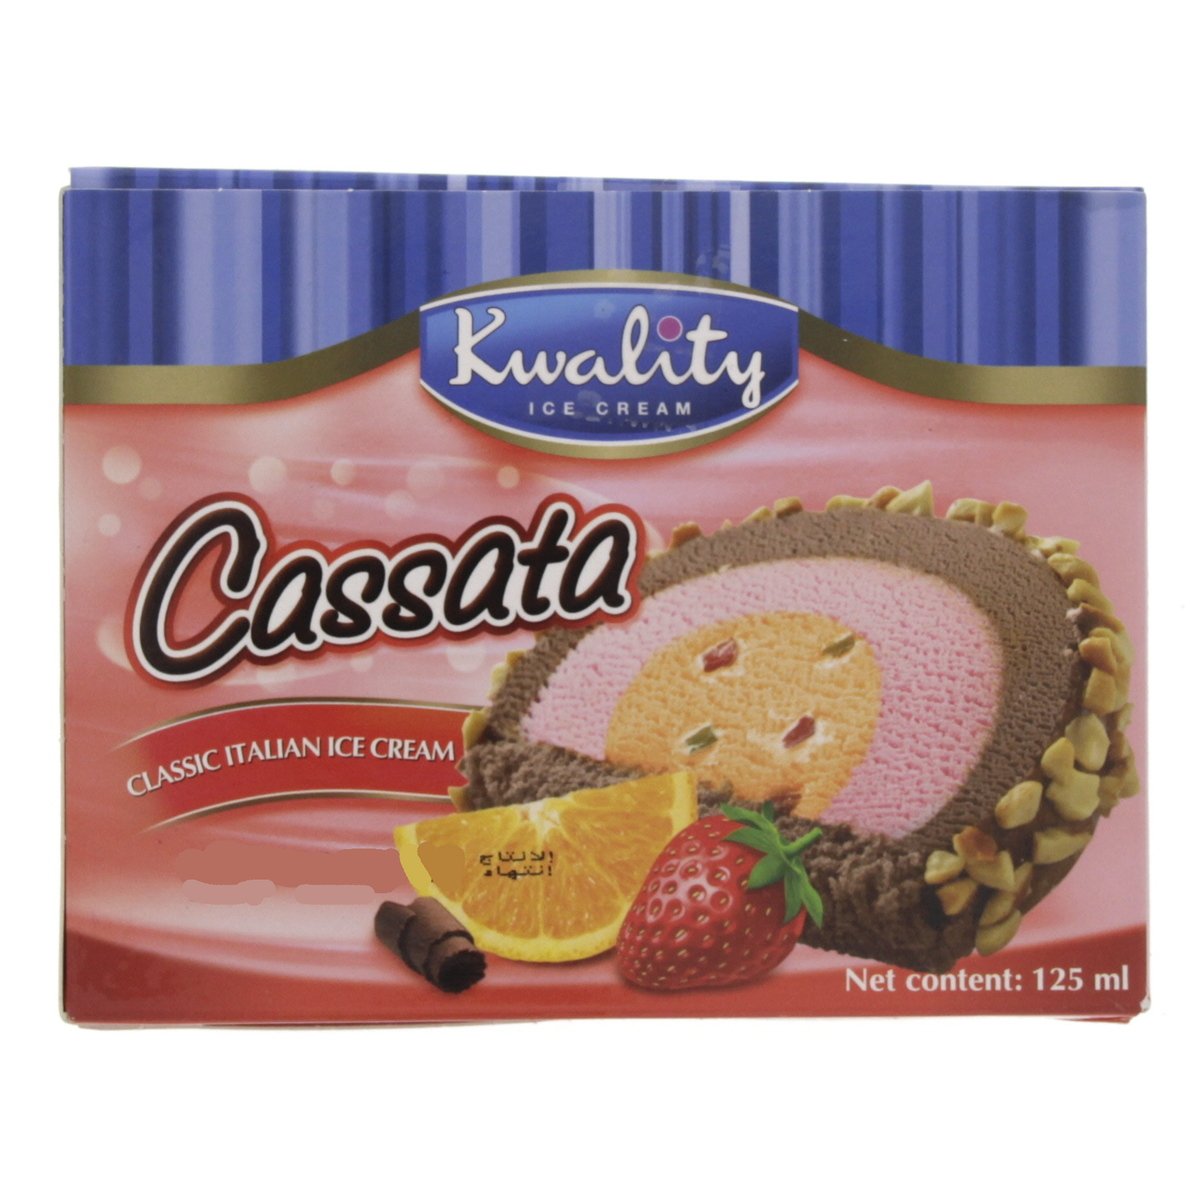 Kwality Cassata Classic Italian Ice Cream 125 ml